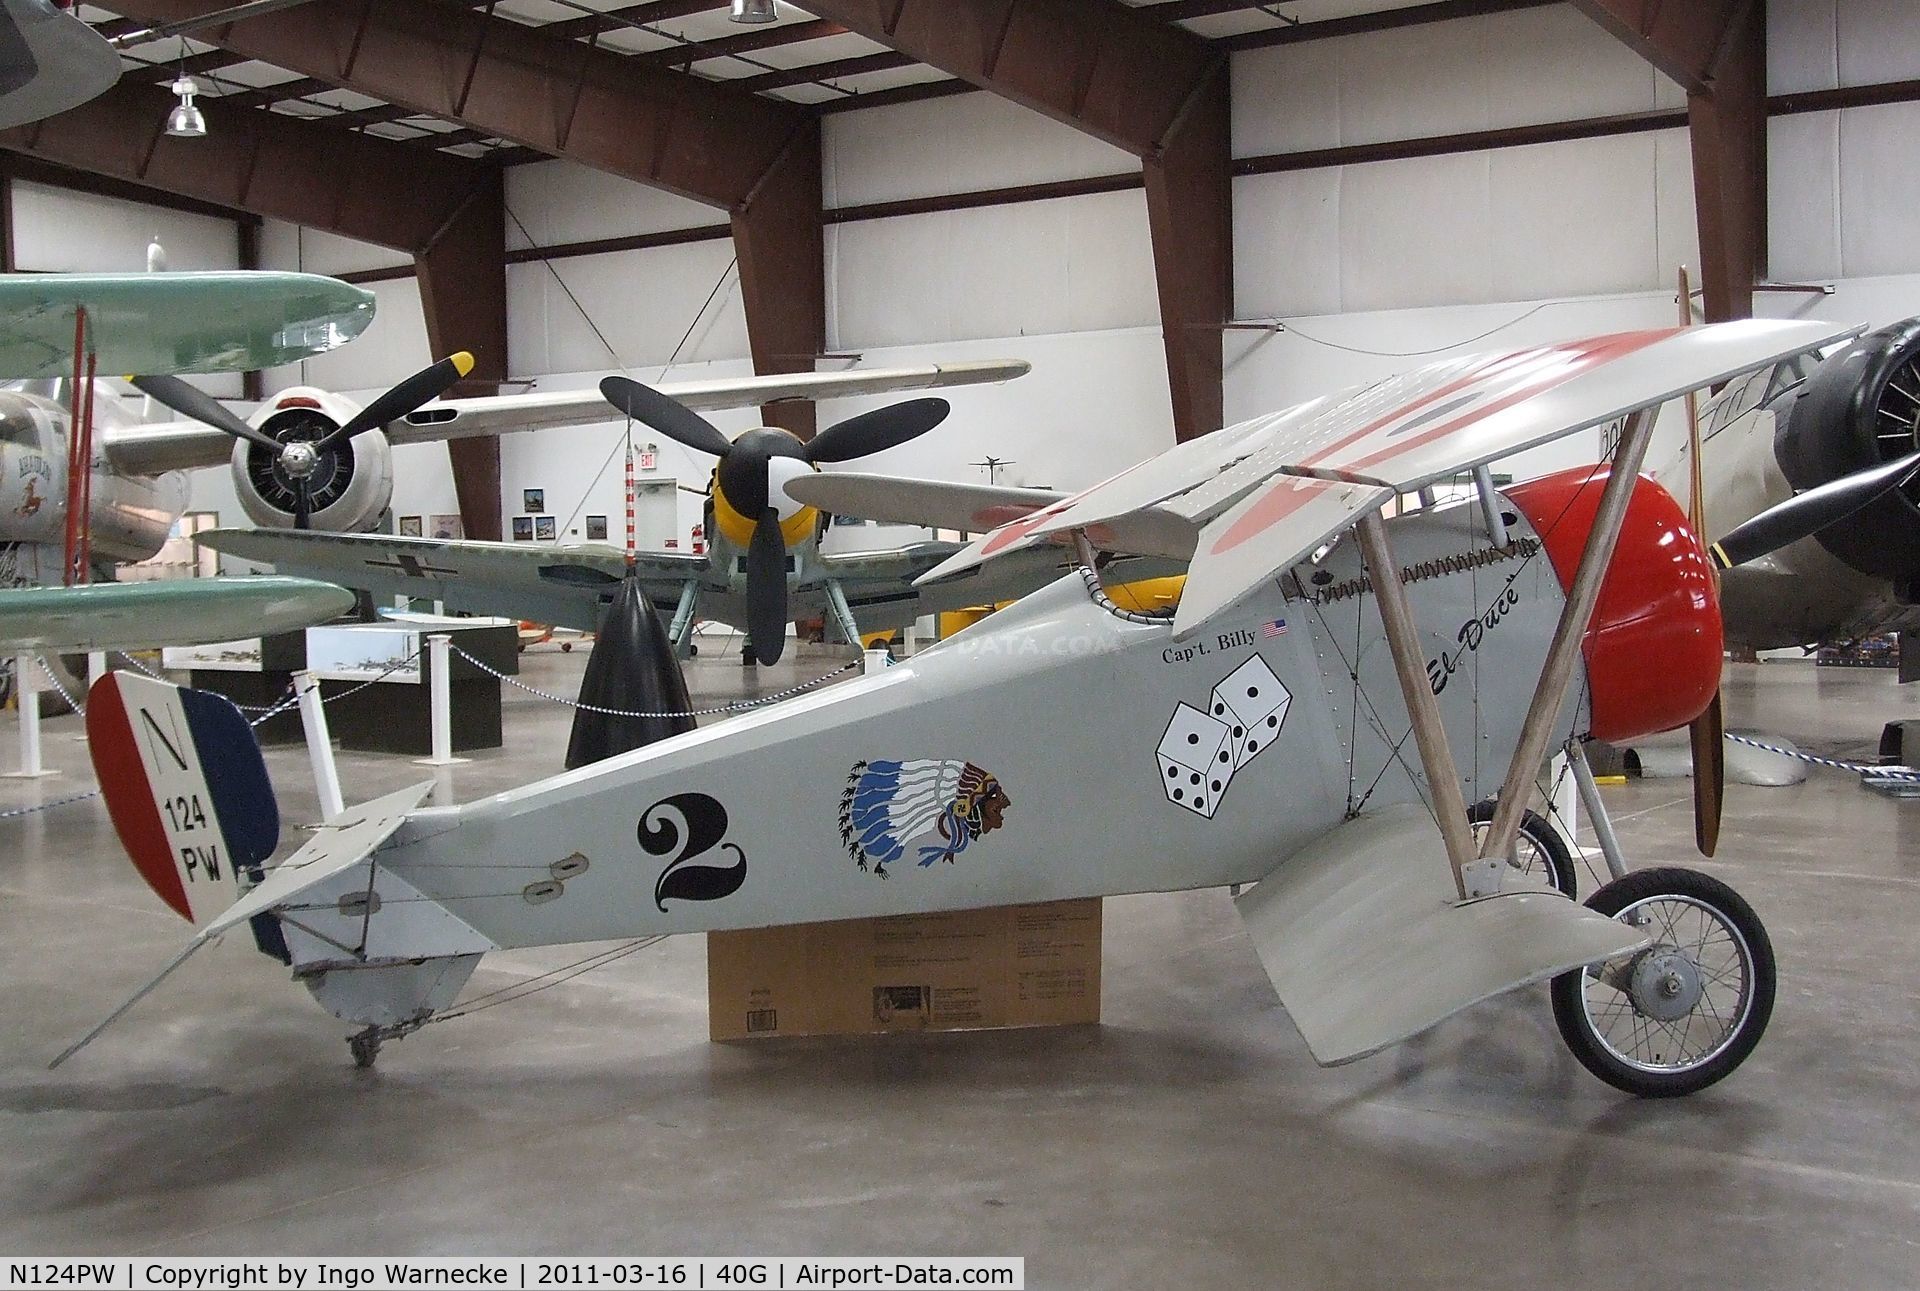 N124PW, 1998 Nieuport 17 Scout Replica C/N 621, Walker Nieuport 17 replica at the Planes of Fame Air Museum, Valle AZ